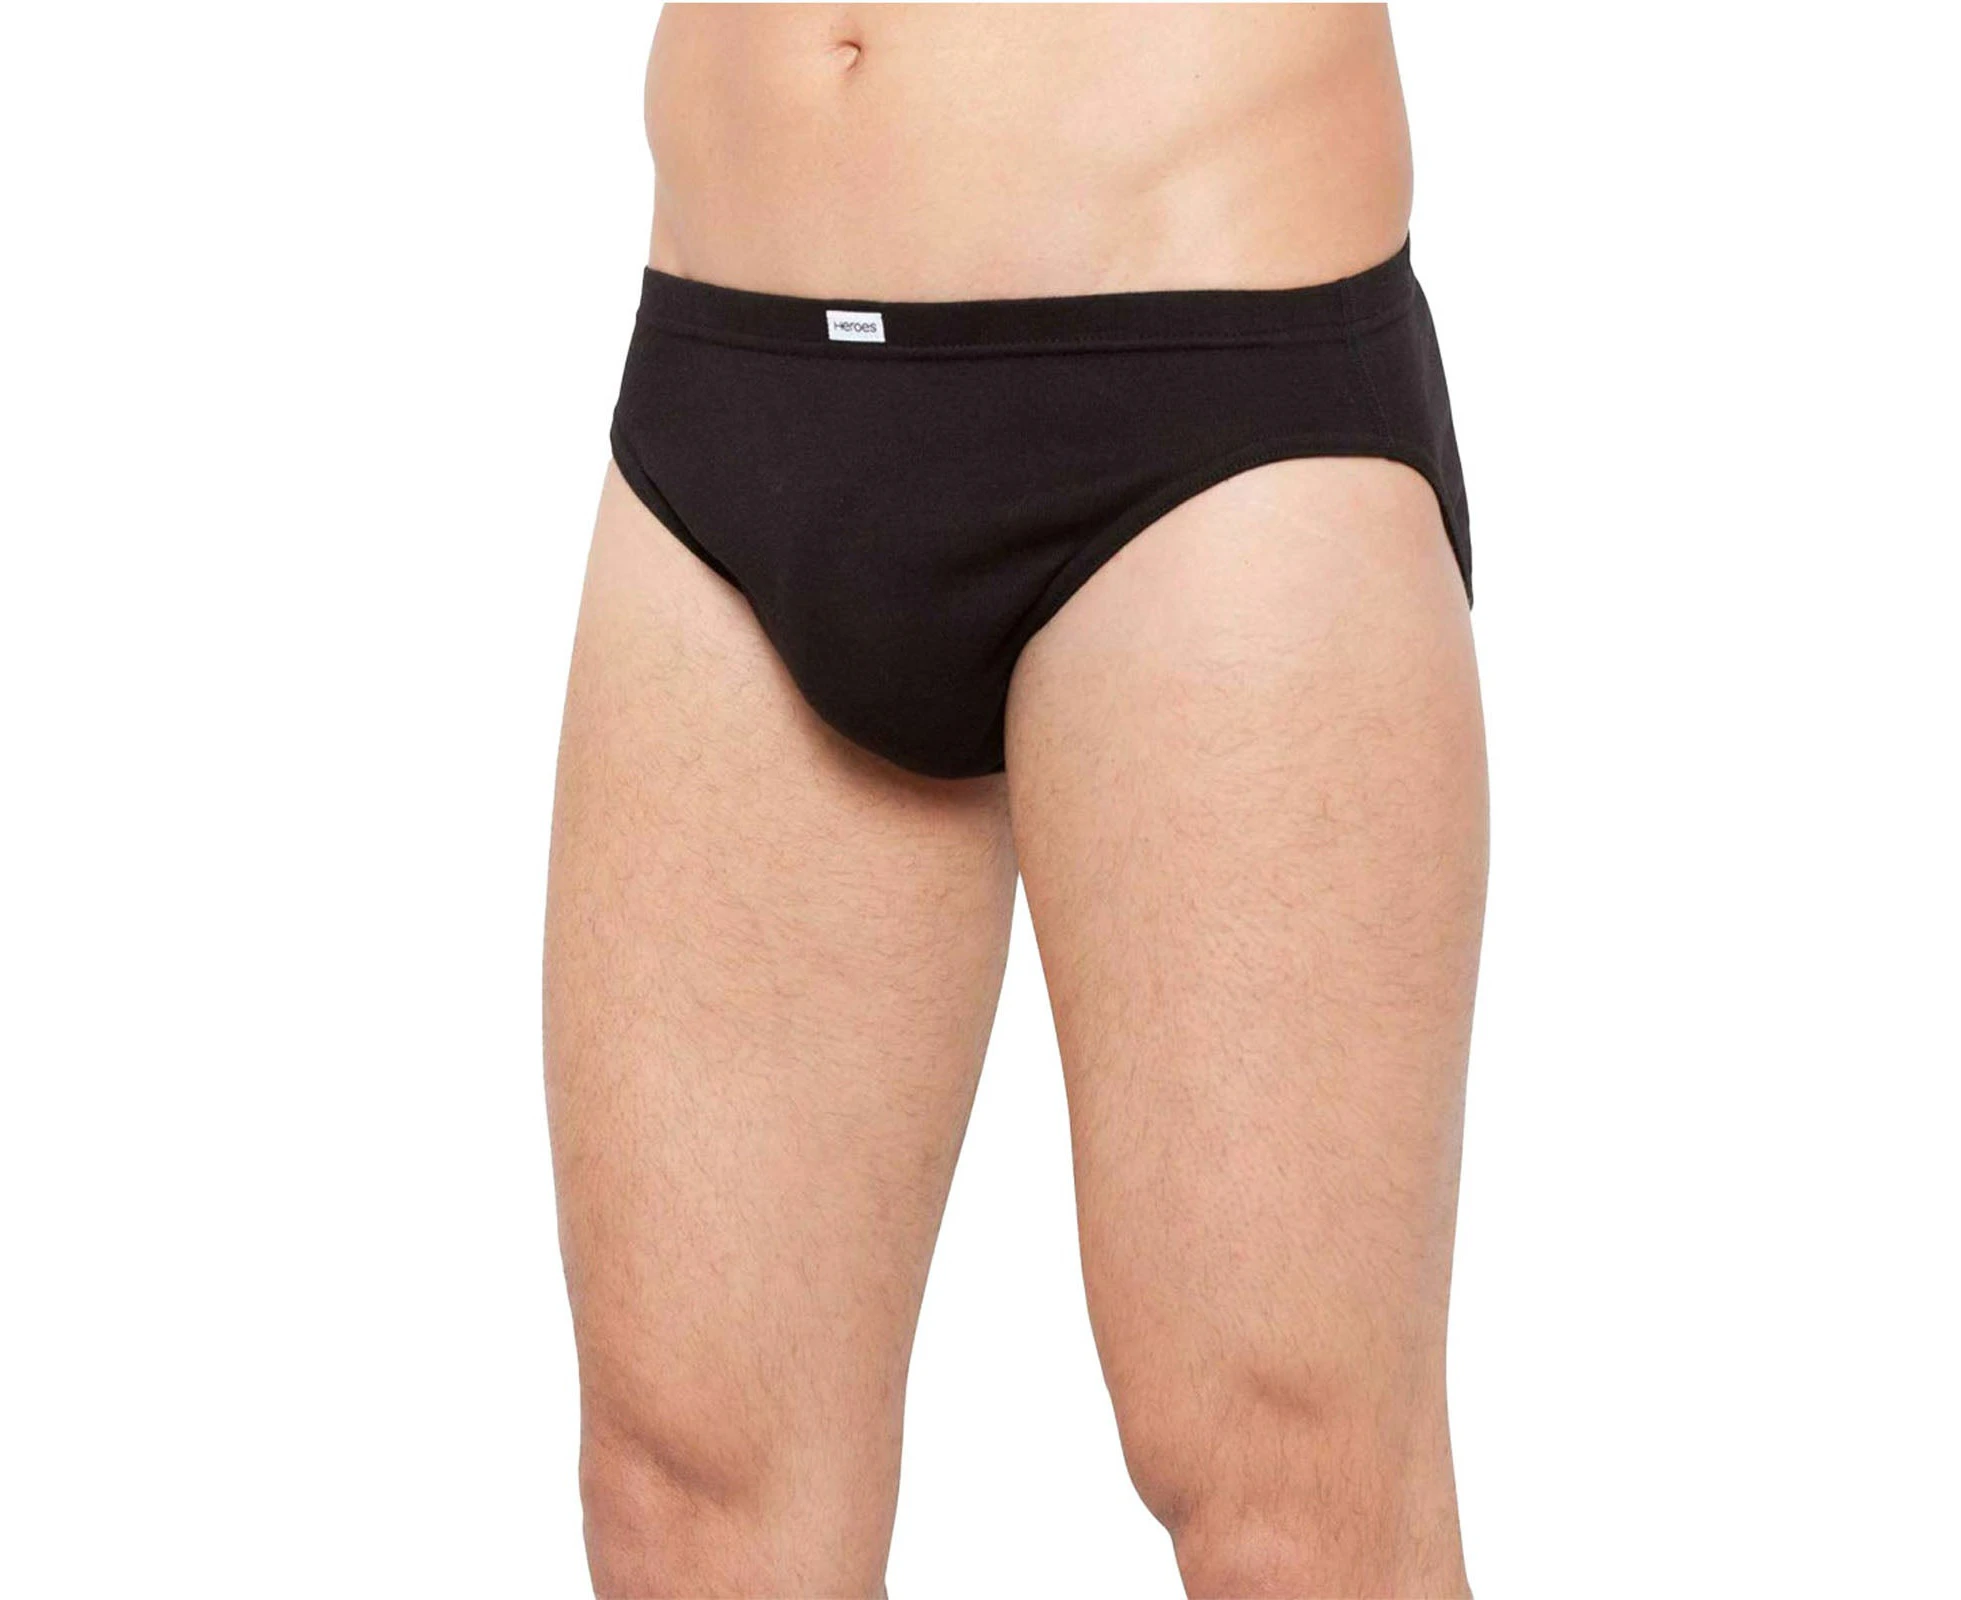 Shop Holeproof men's underwear on sale now!